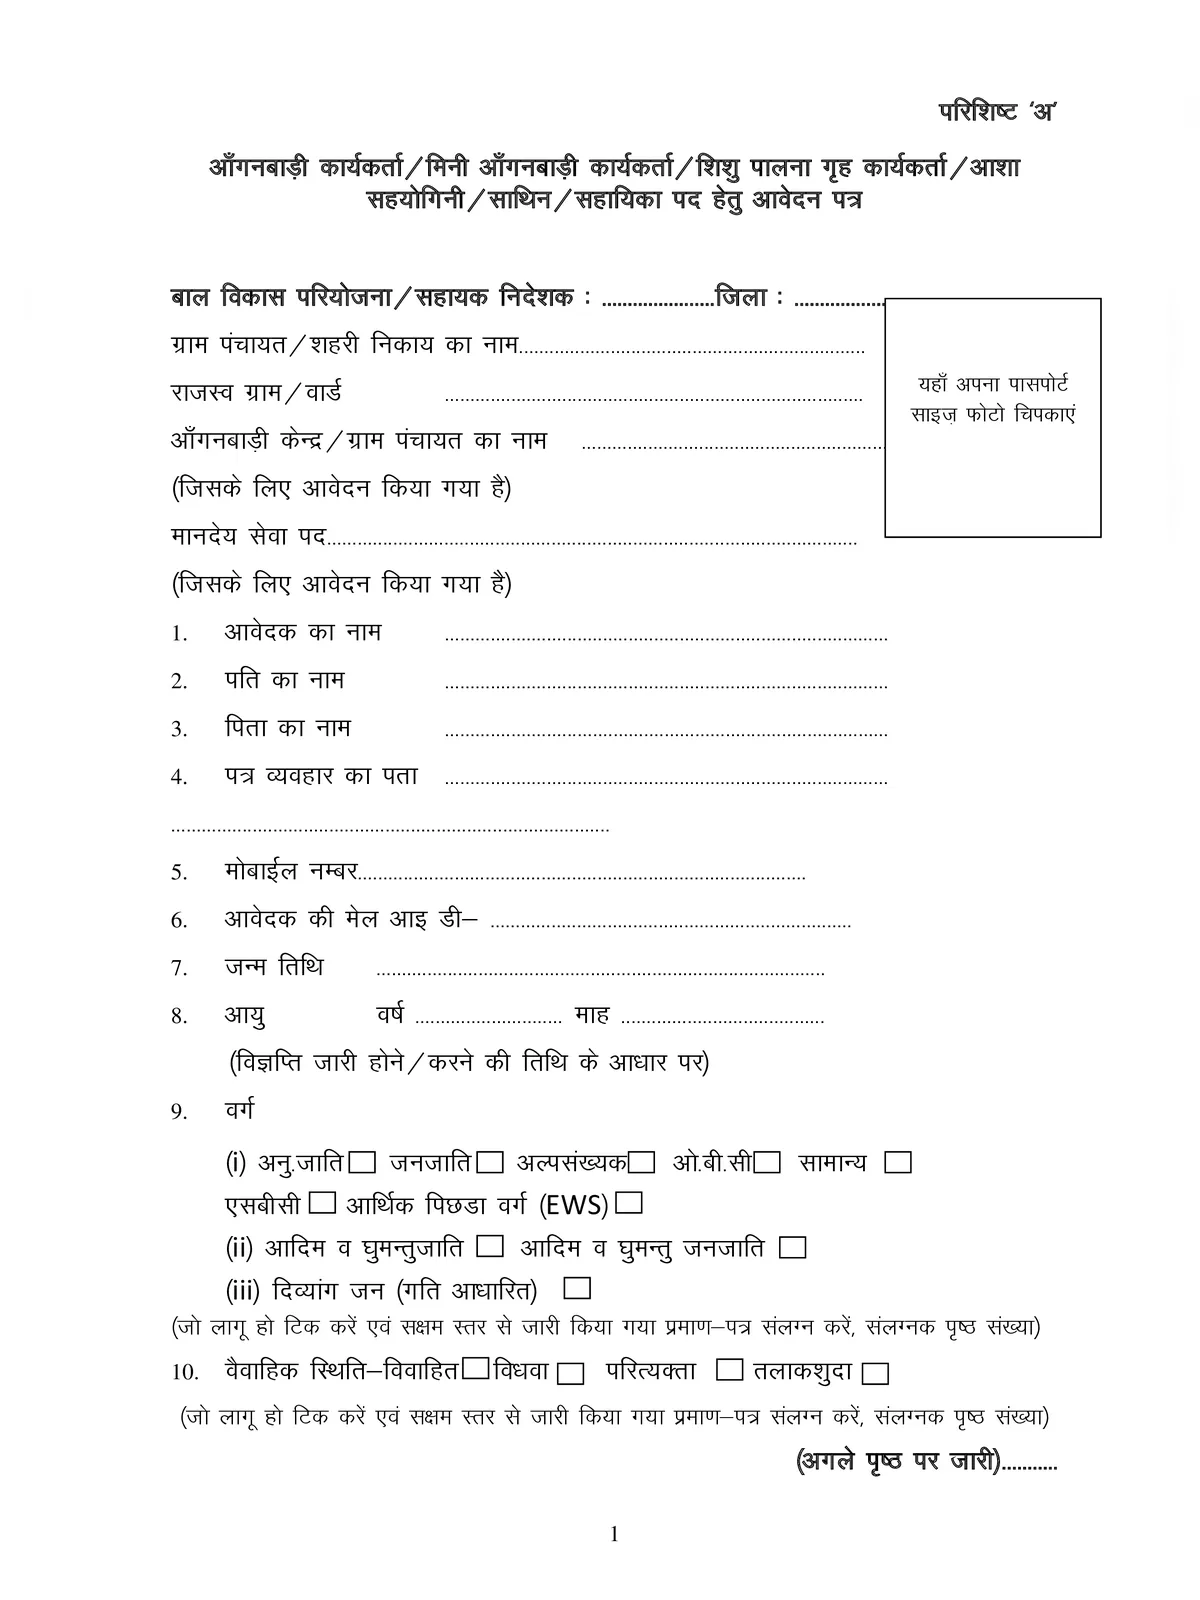 wcd.rajasthan.gov.in Application Form